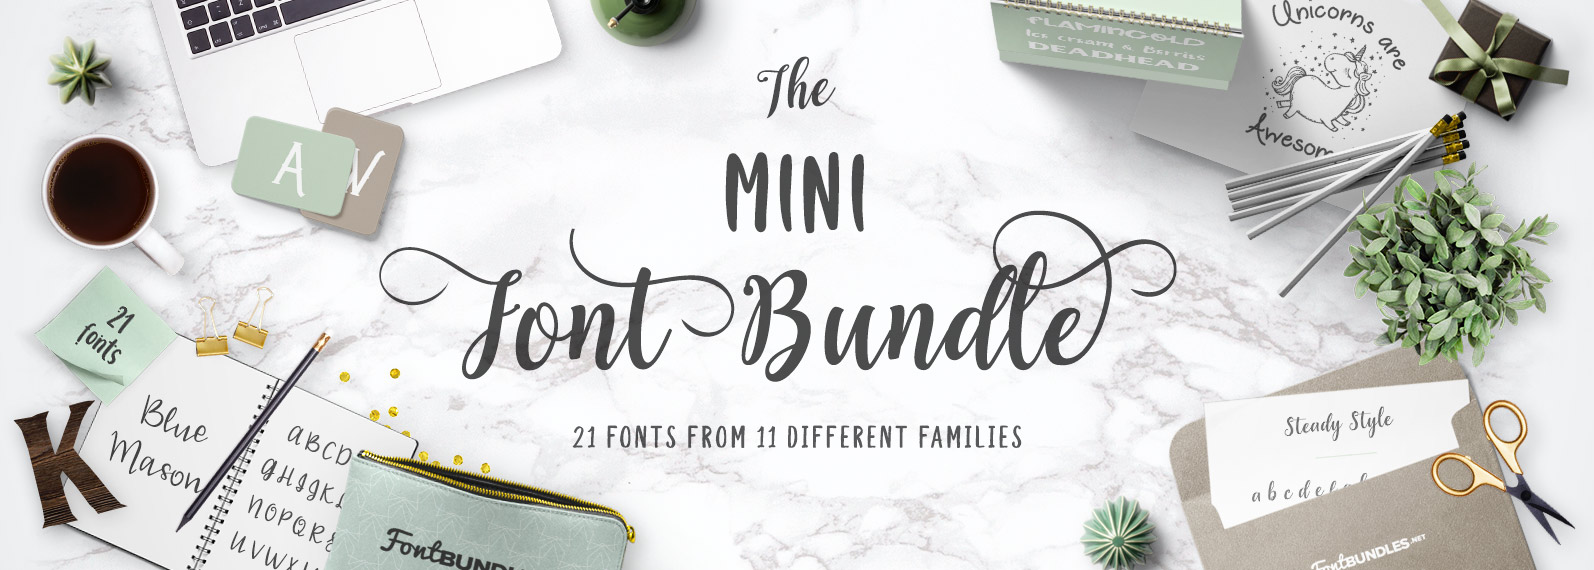 The Mini Font Bundle Cover